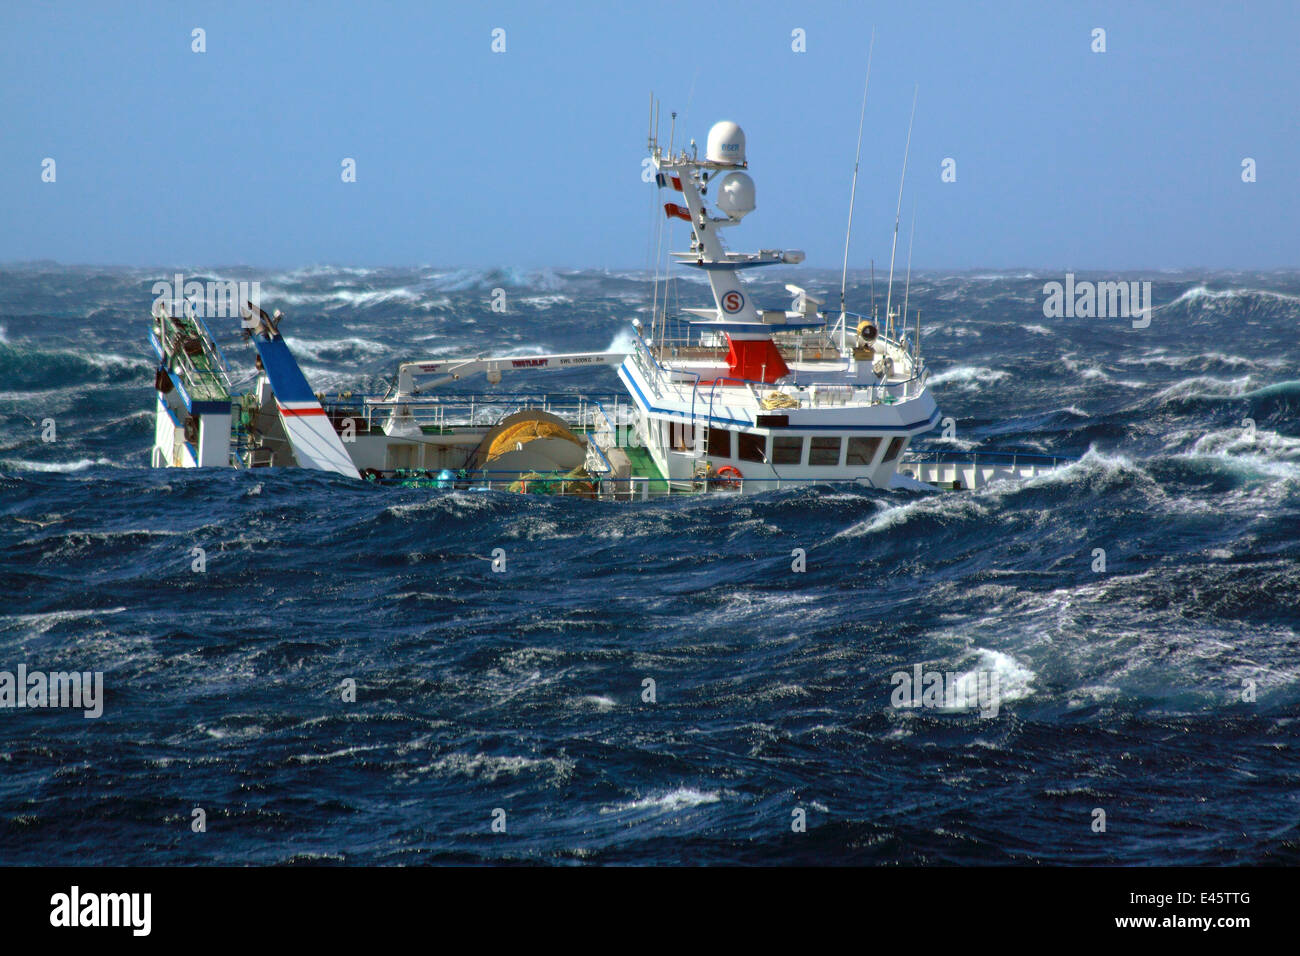 Fischereifahrzeug Ocean Harvest in riesigen Wellen an der Nordsee September 2010. Eigentum freigegeben. Stockfoto